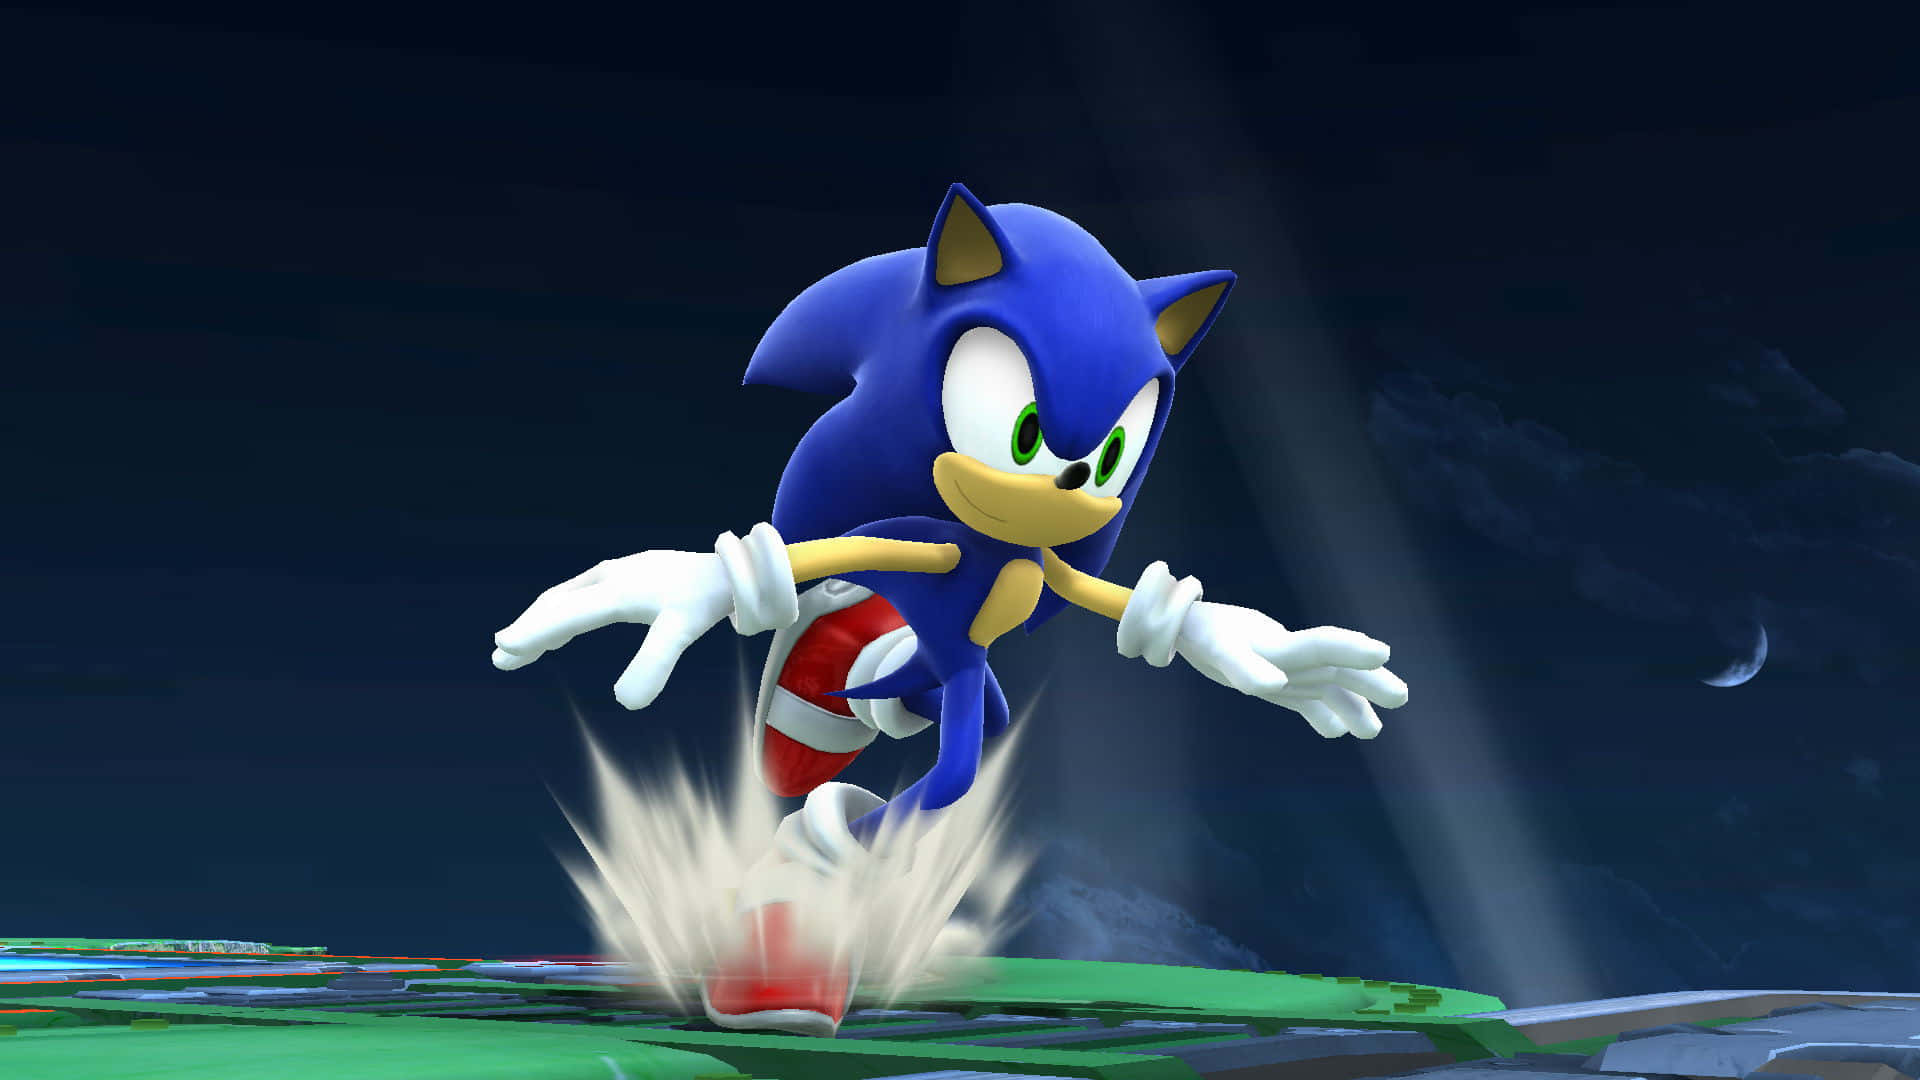 Modern Sonic the Hedgehog sprinting through a colorful digital landscape Wallpaper